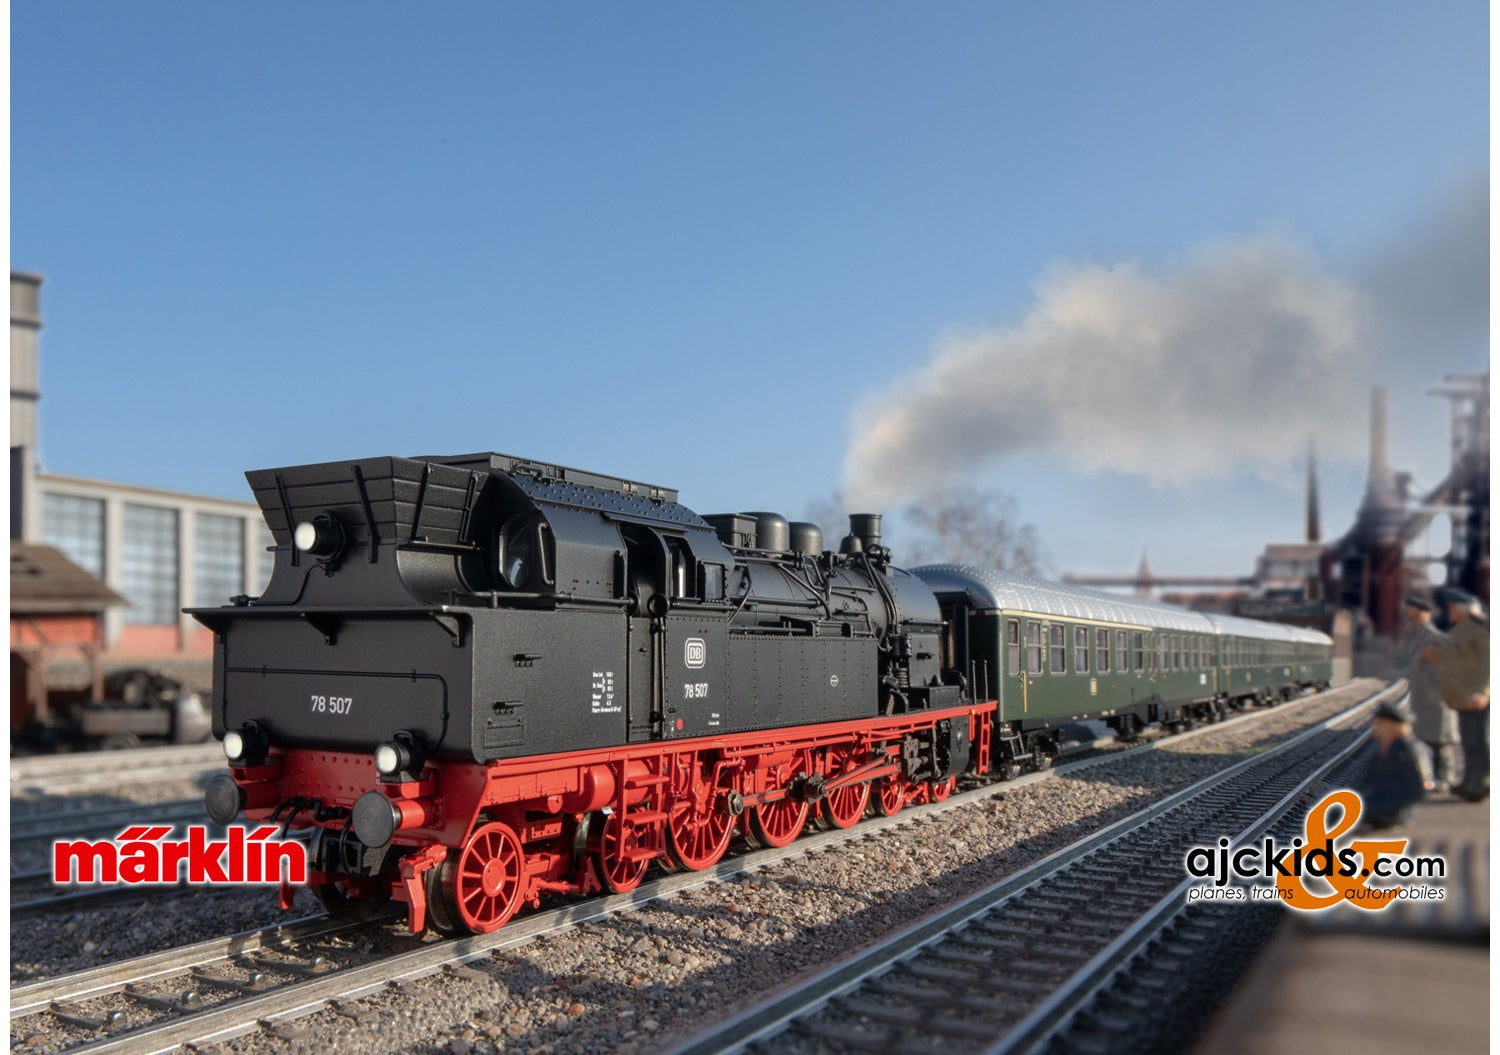 Marklin 39787 - Class 78 Steam Locomotive at Ajckids.com